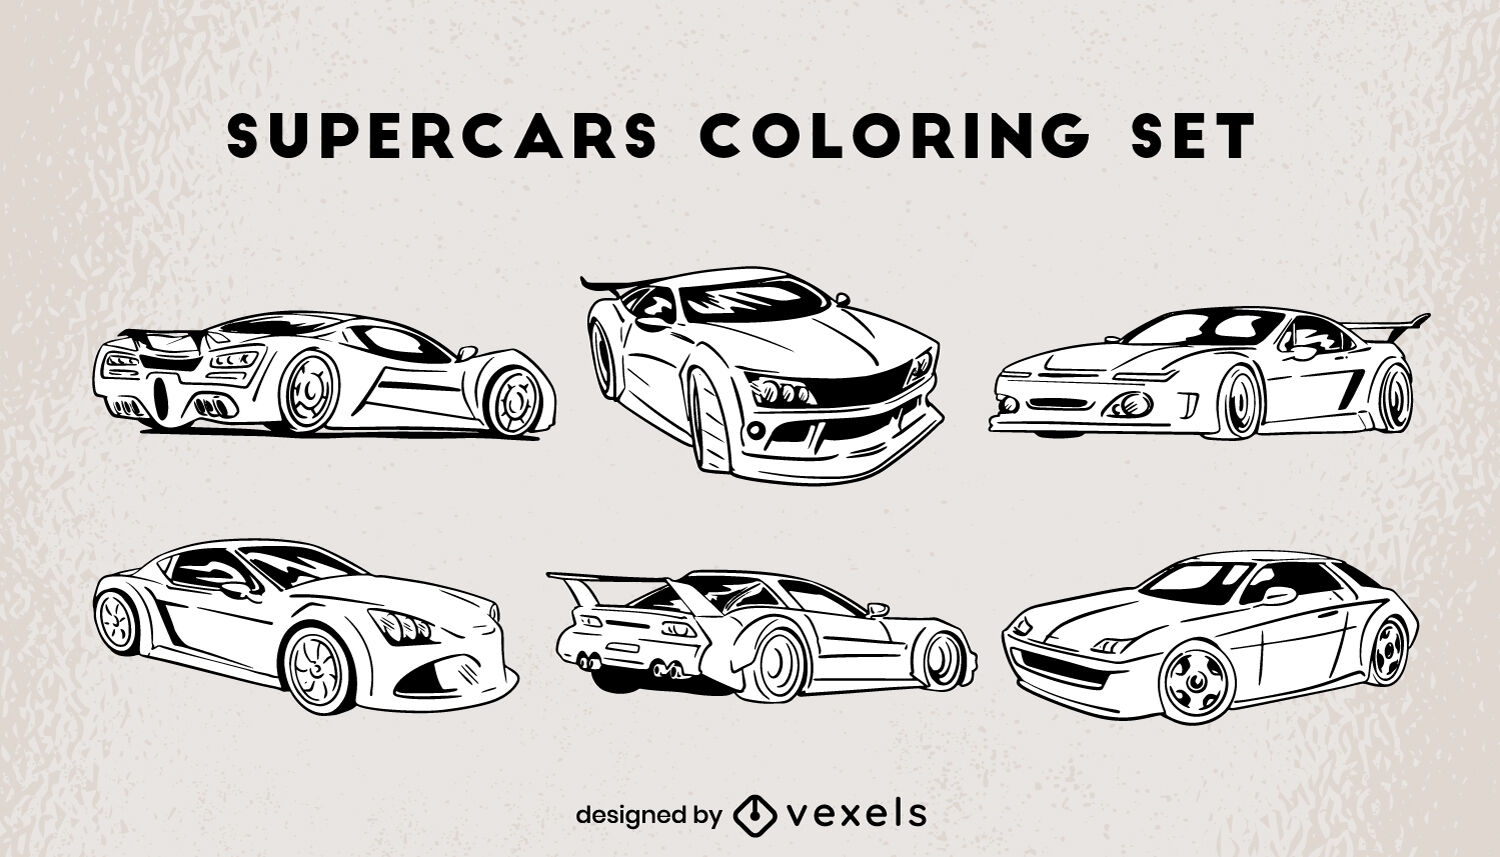 Super cars transportation coloring set